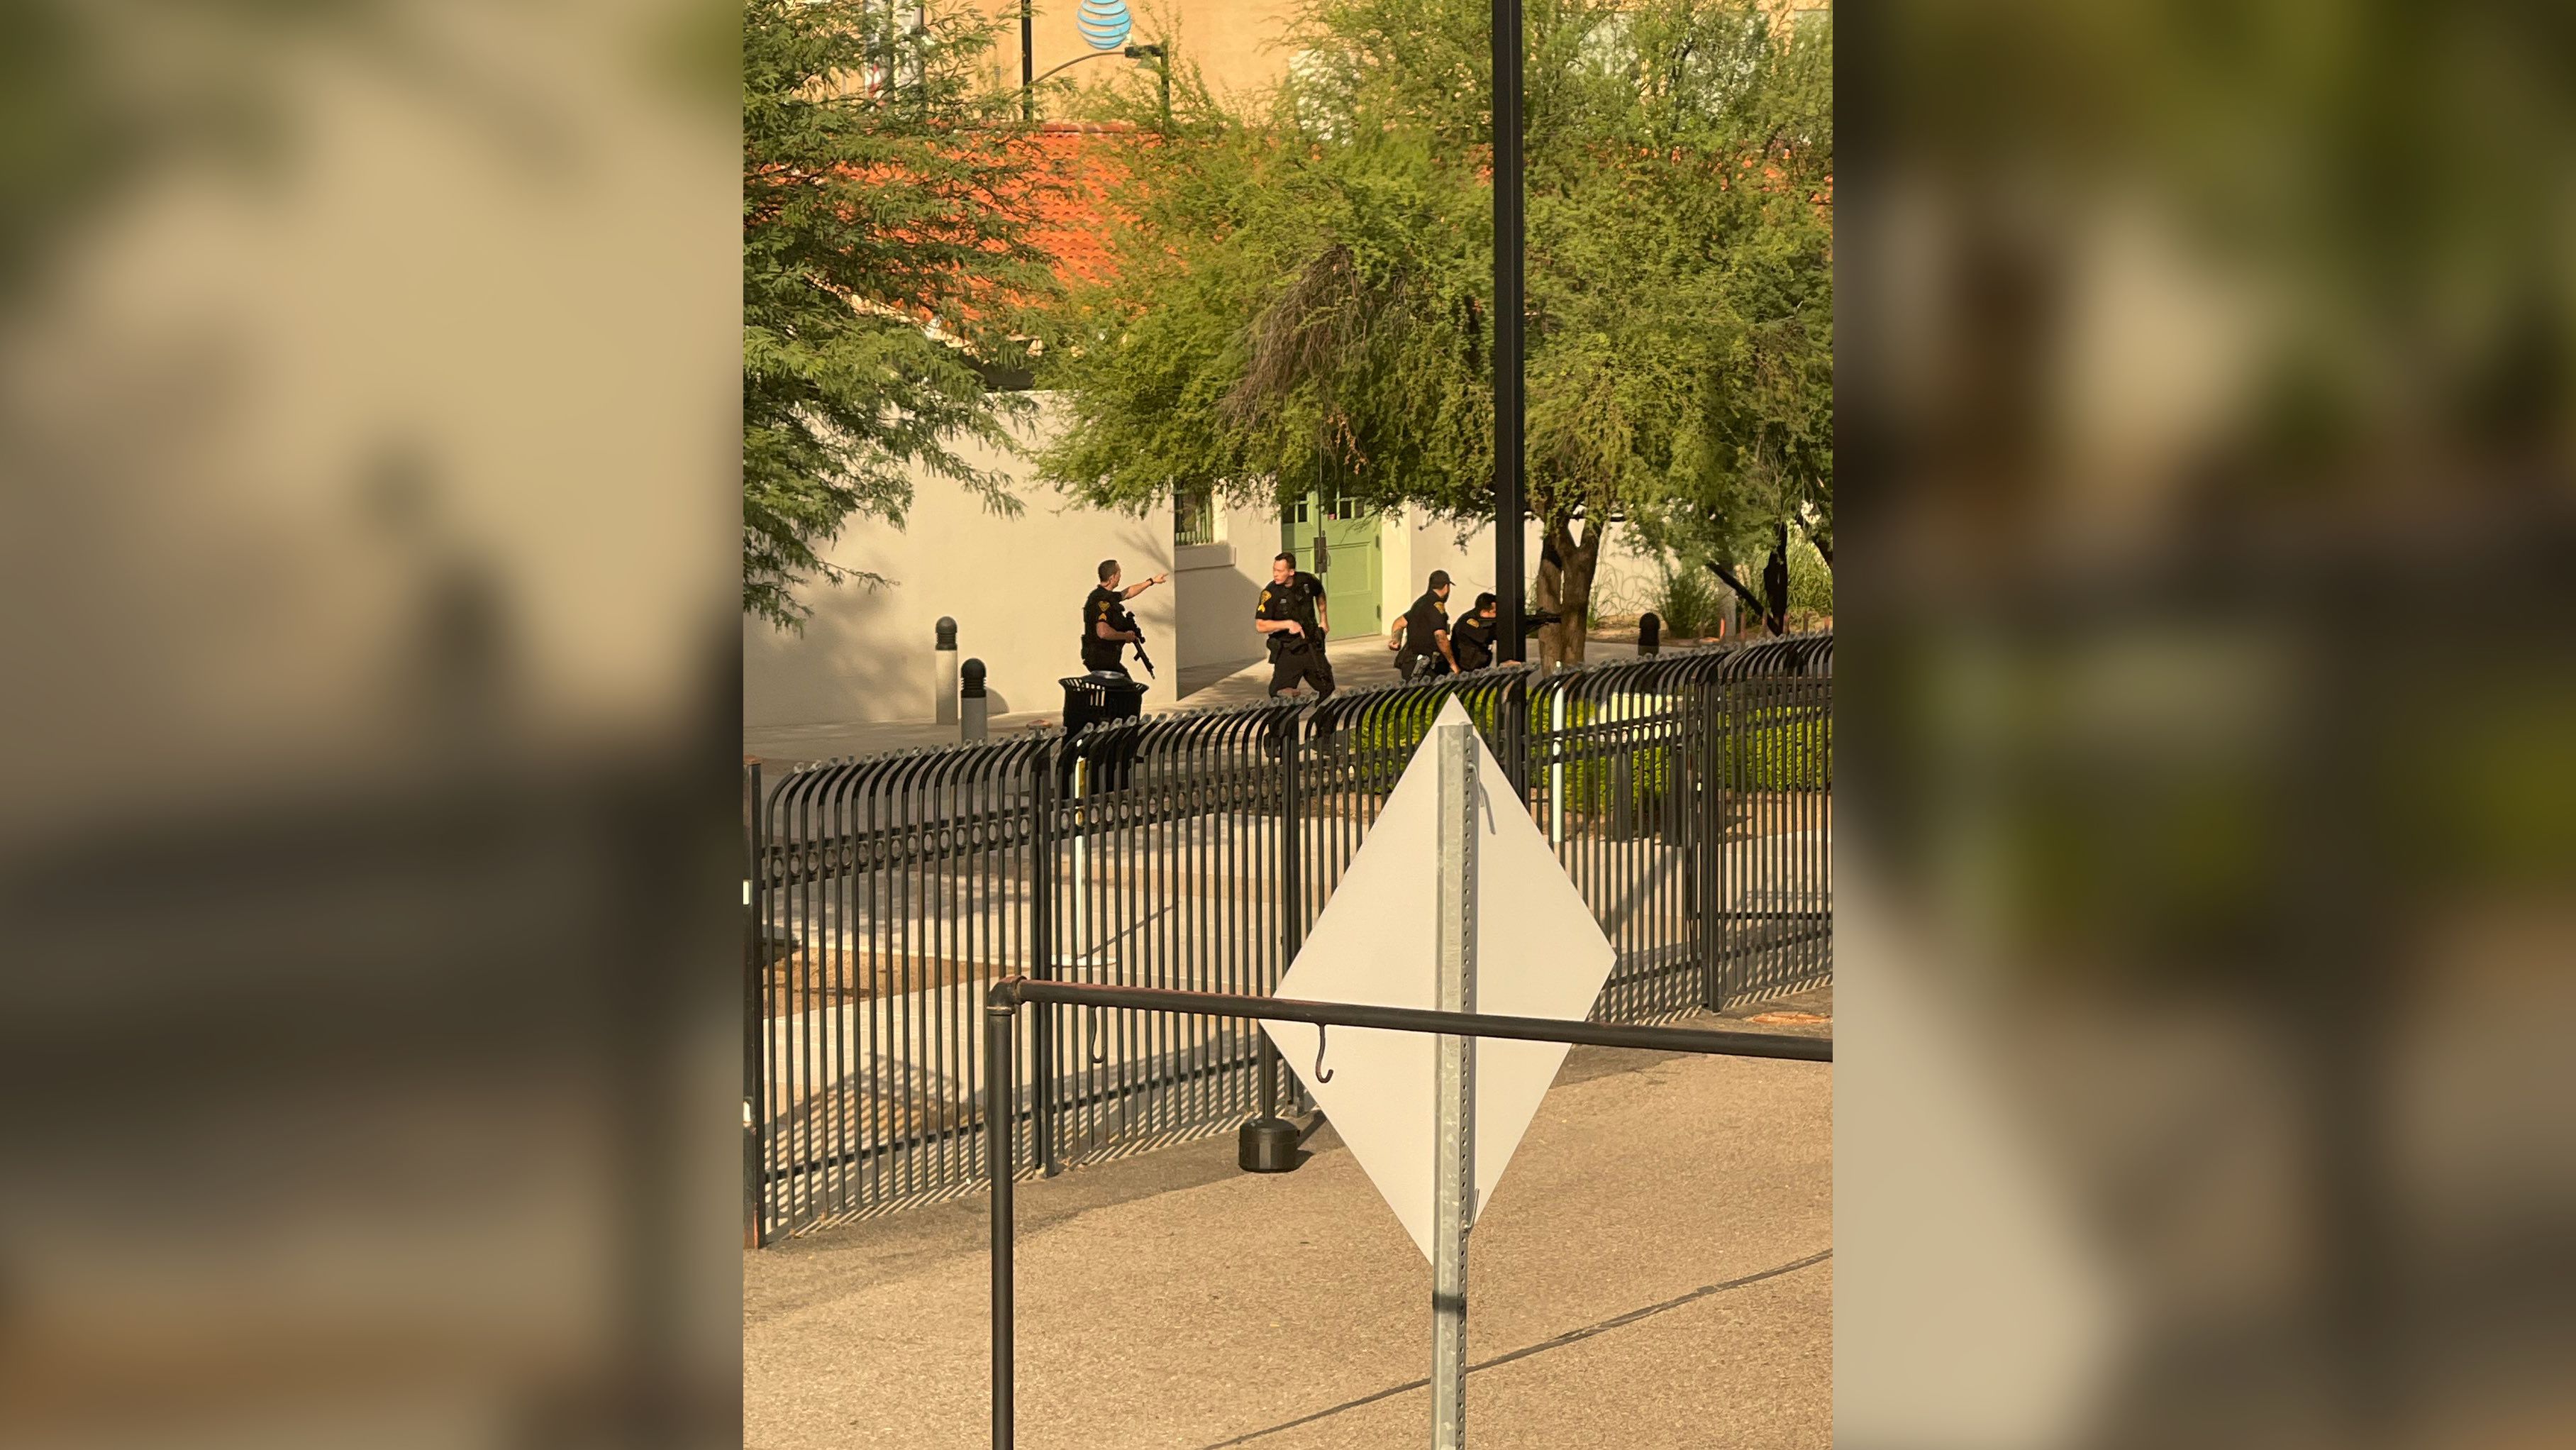 Evan Courtney shot this image of police responding to scene in Tucson, Arizona.